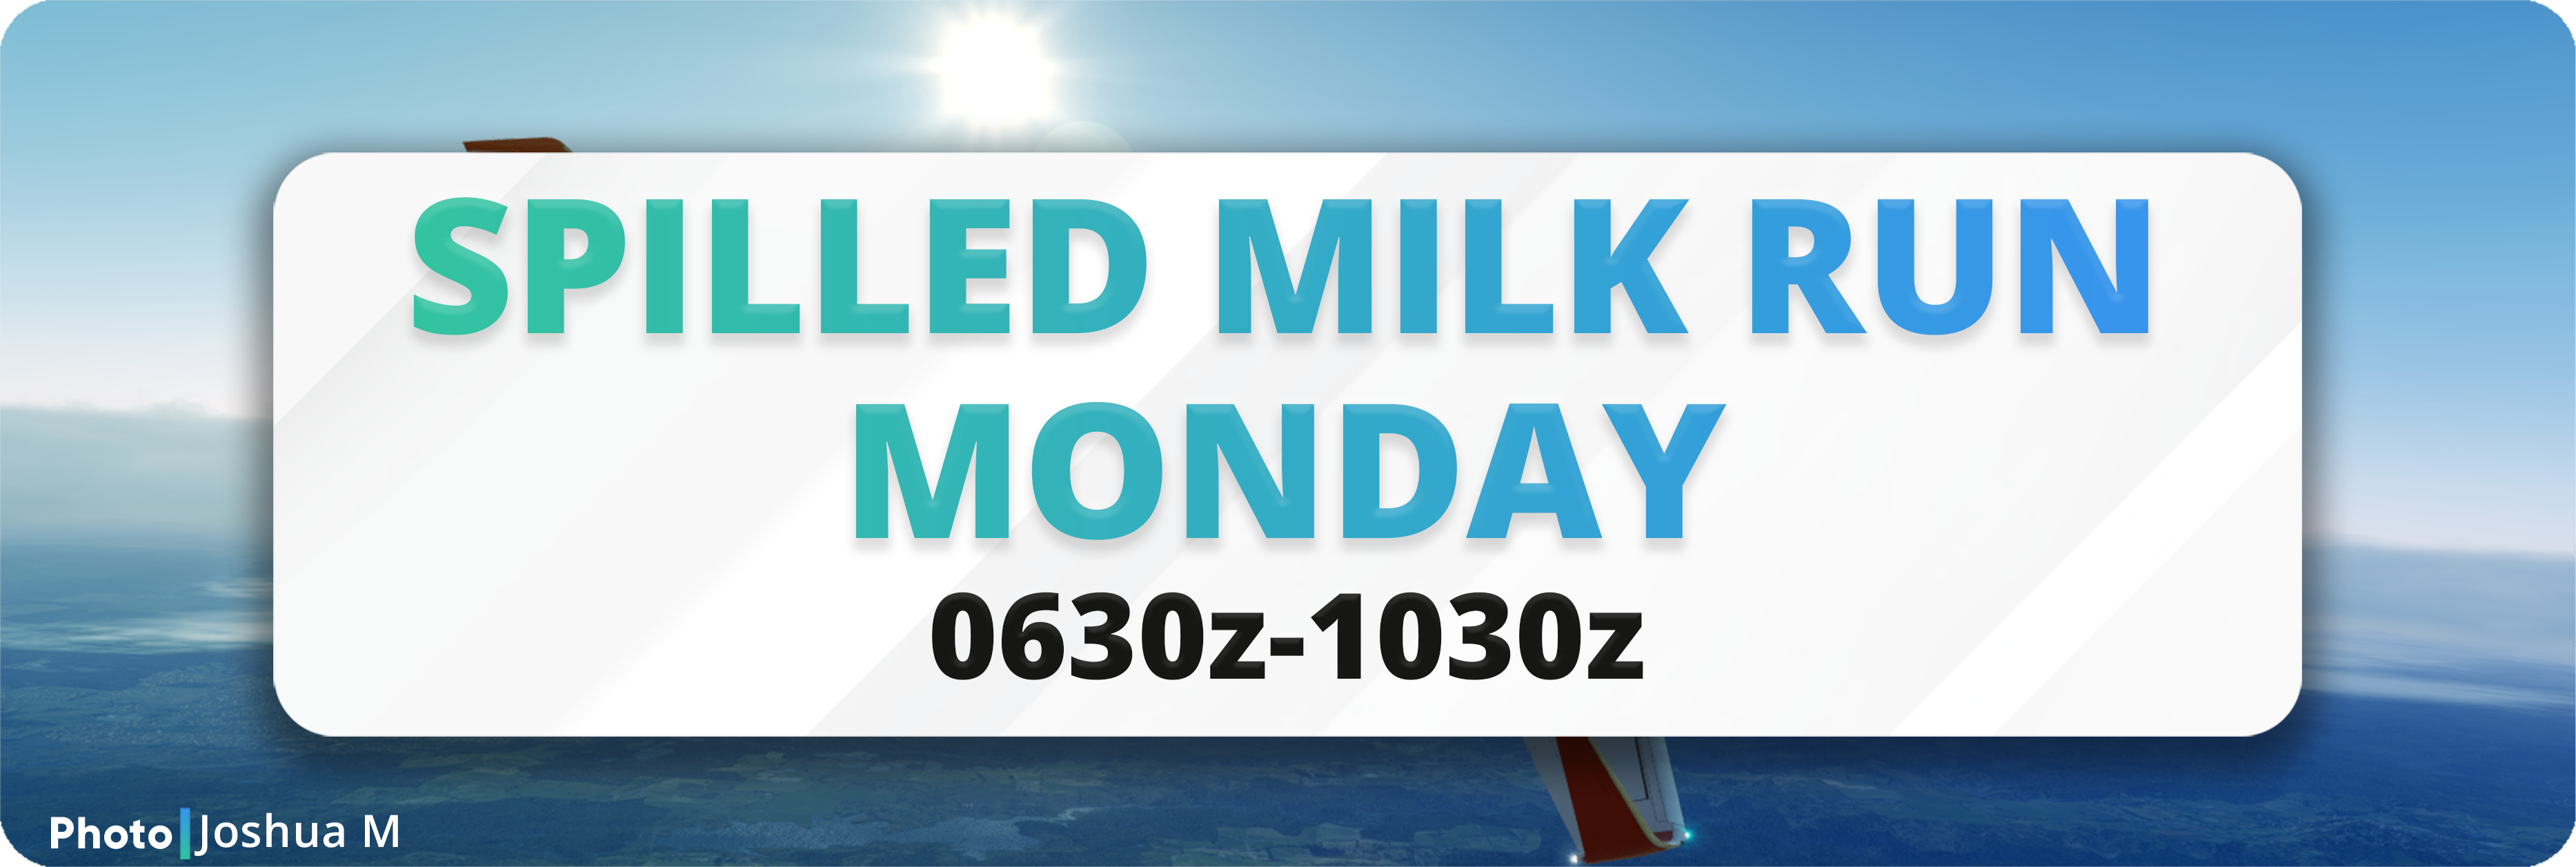 Spilled Milk Run Monday